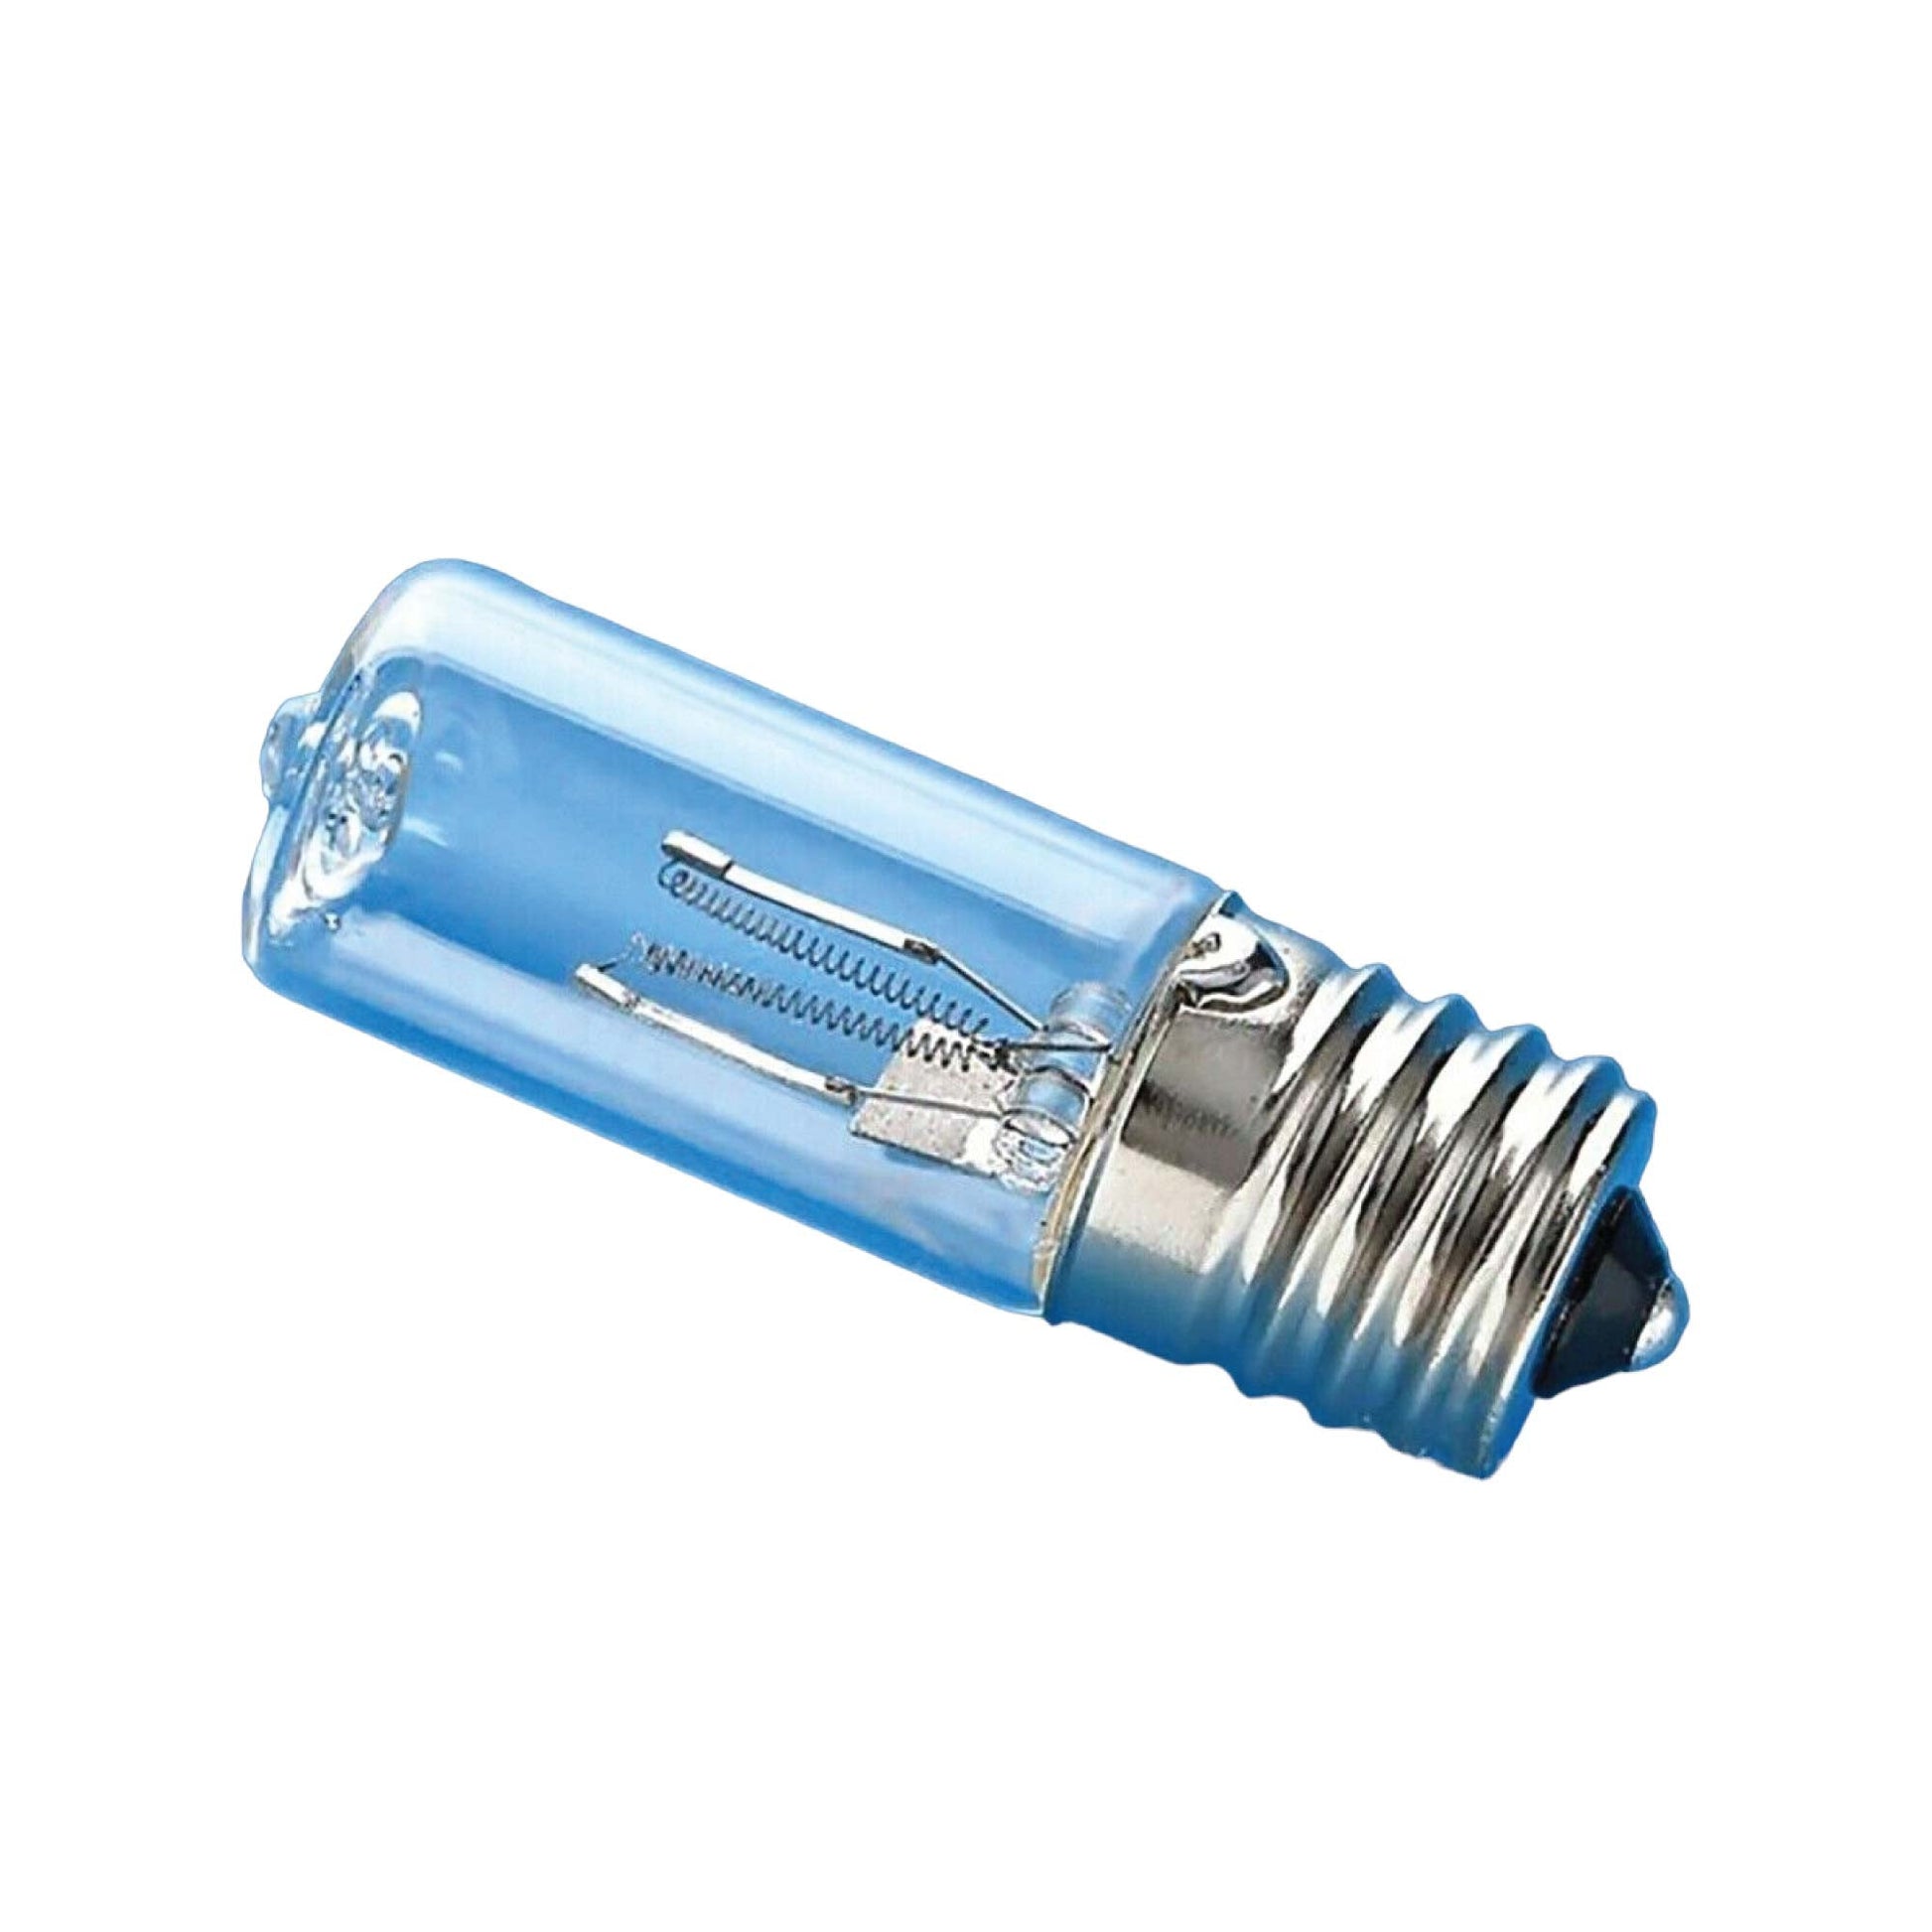 3W Replacement UV Light Lamp Bulb Sterilising Disinfecting Germicidal Ozone